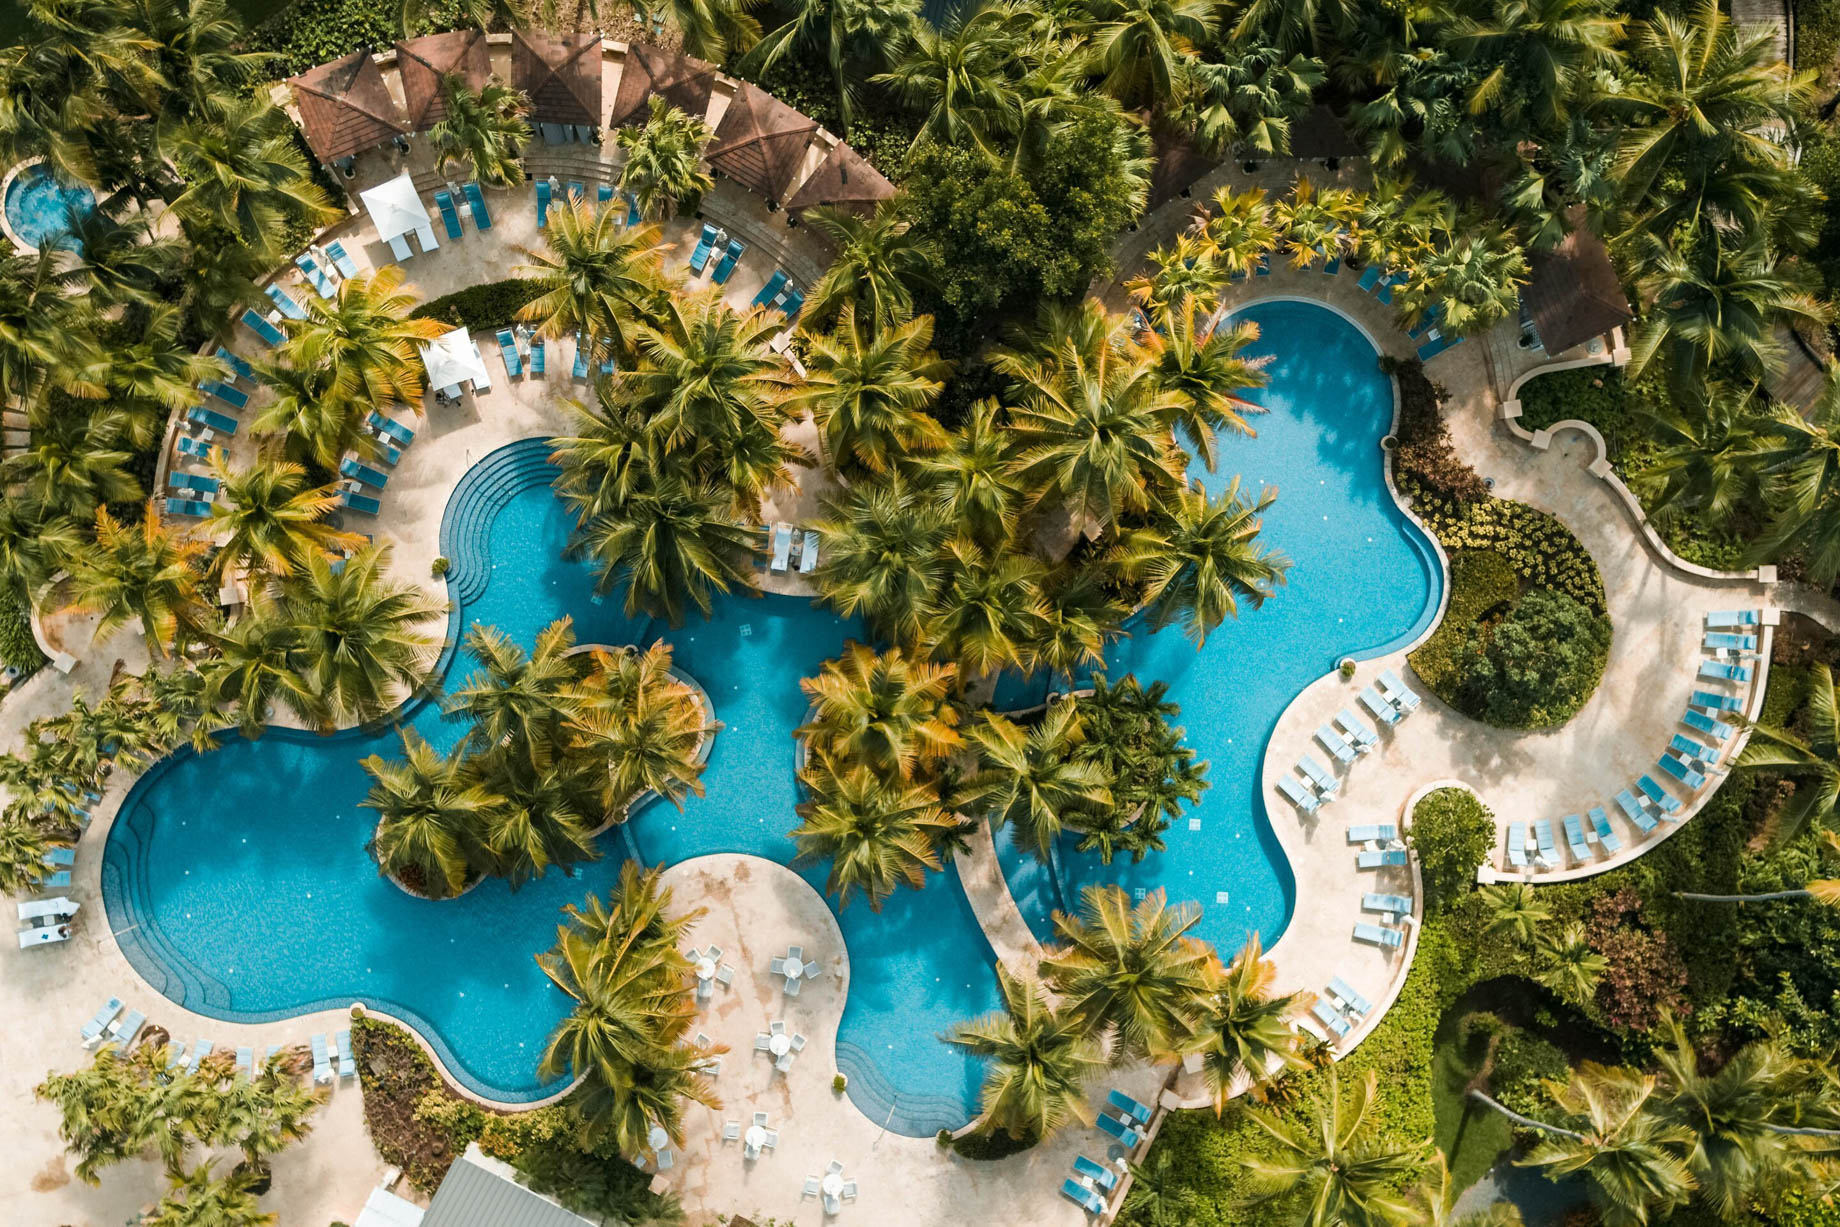 The St. Regis Bahia Beach Resort – Rio Grande, Puerto Rico – Outdoor Pool